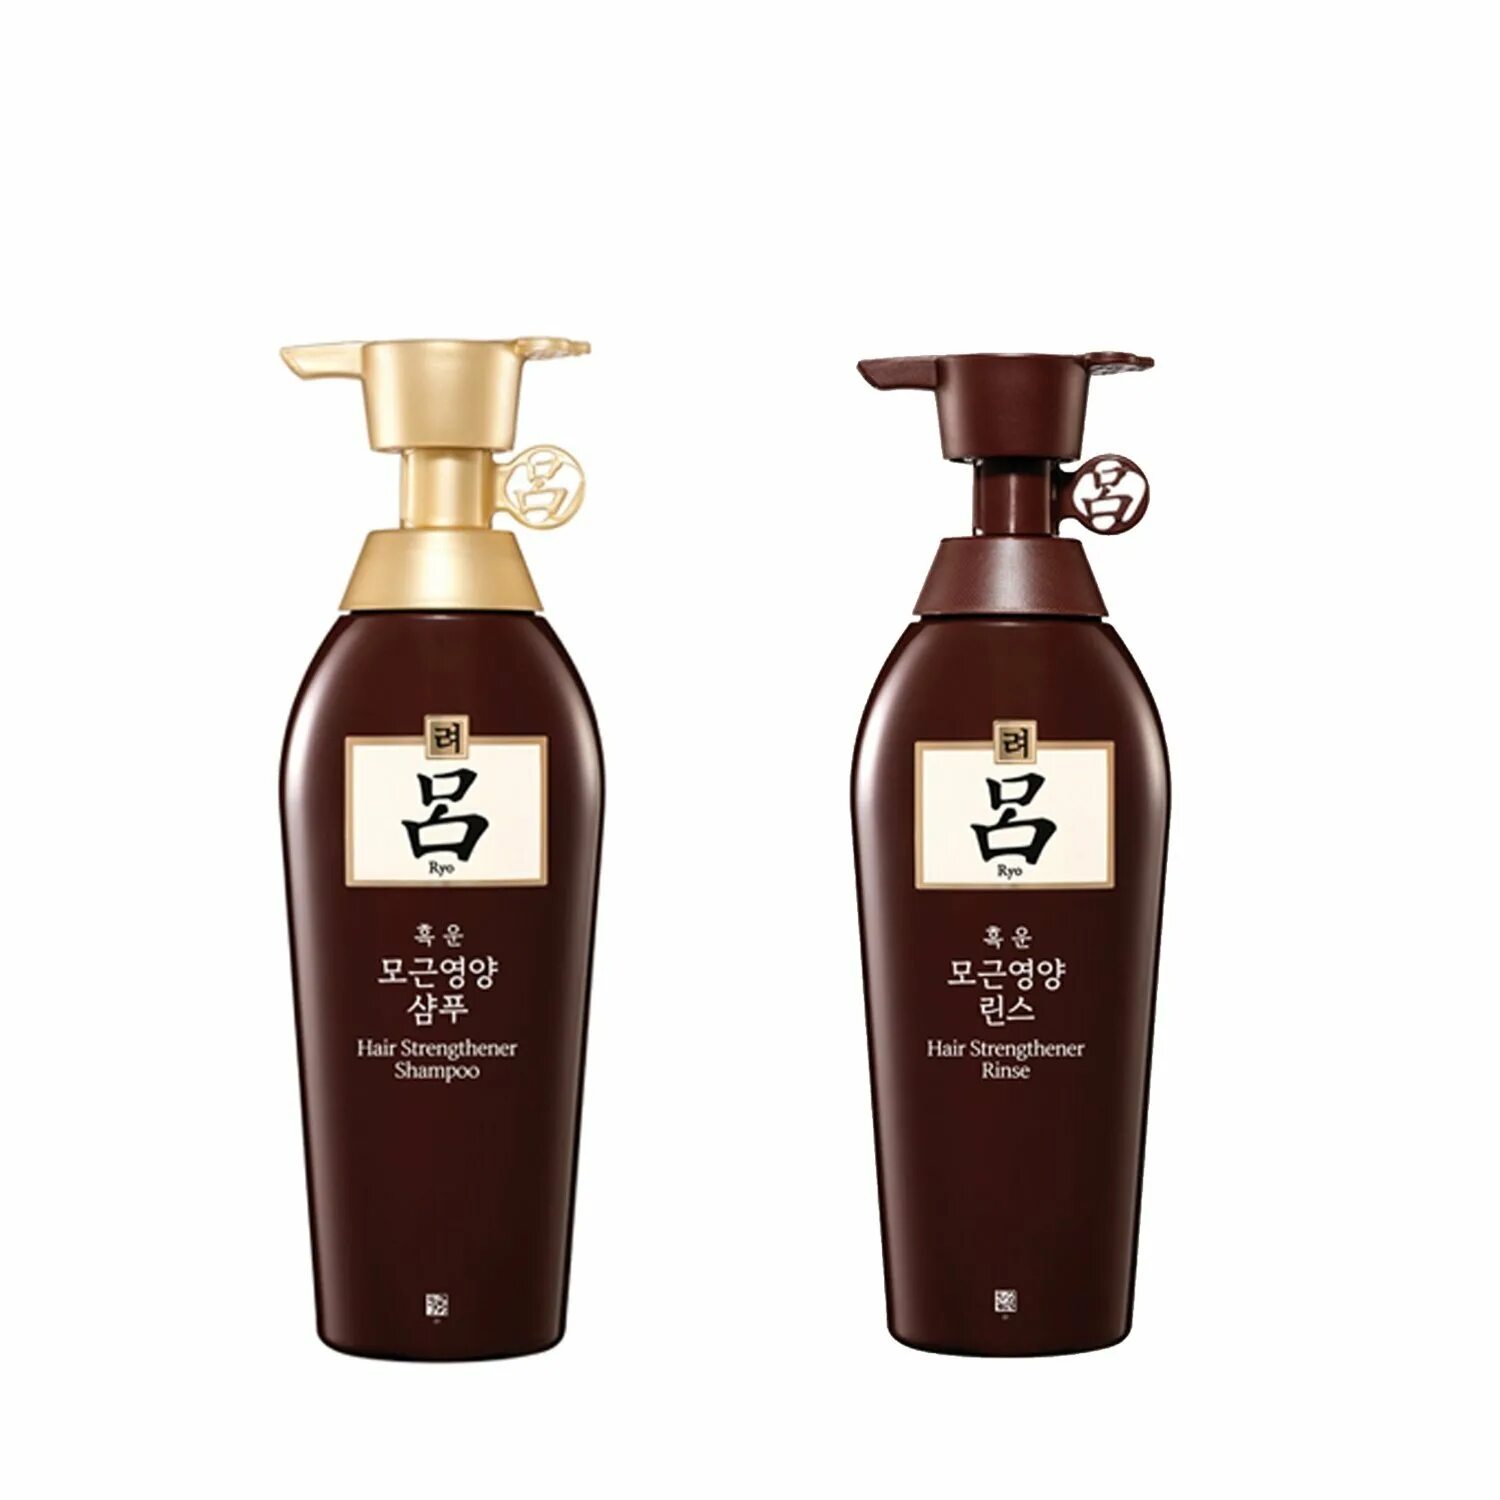 Корейский шампунь купить. Ryo hair Strengthener Shampoo, 500ml. Корейский шампунь jeongzan. Аюнче шампунь Корея. Nak корейский шампунь.